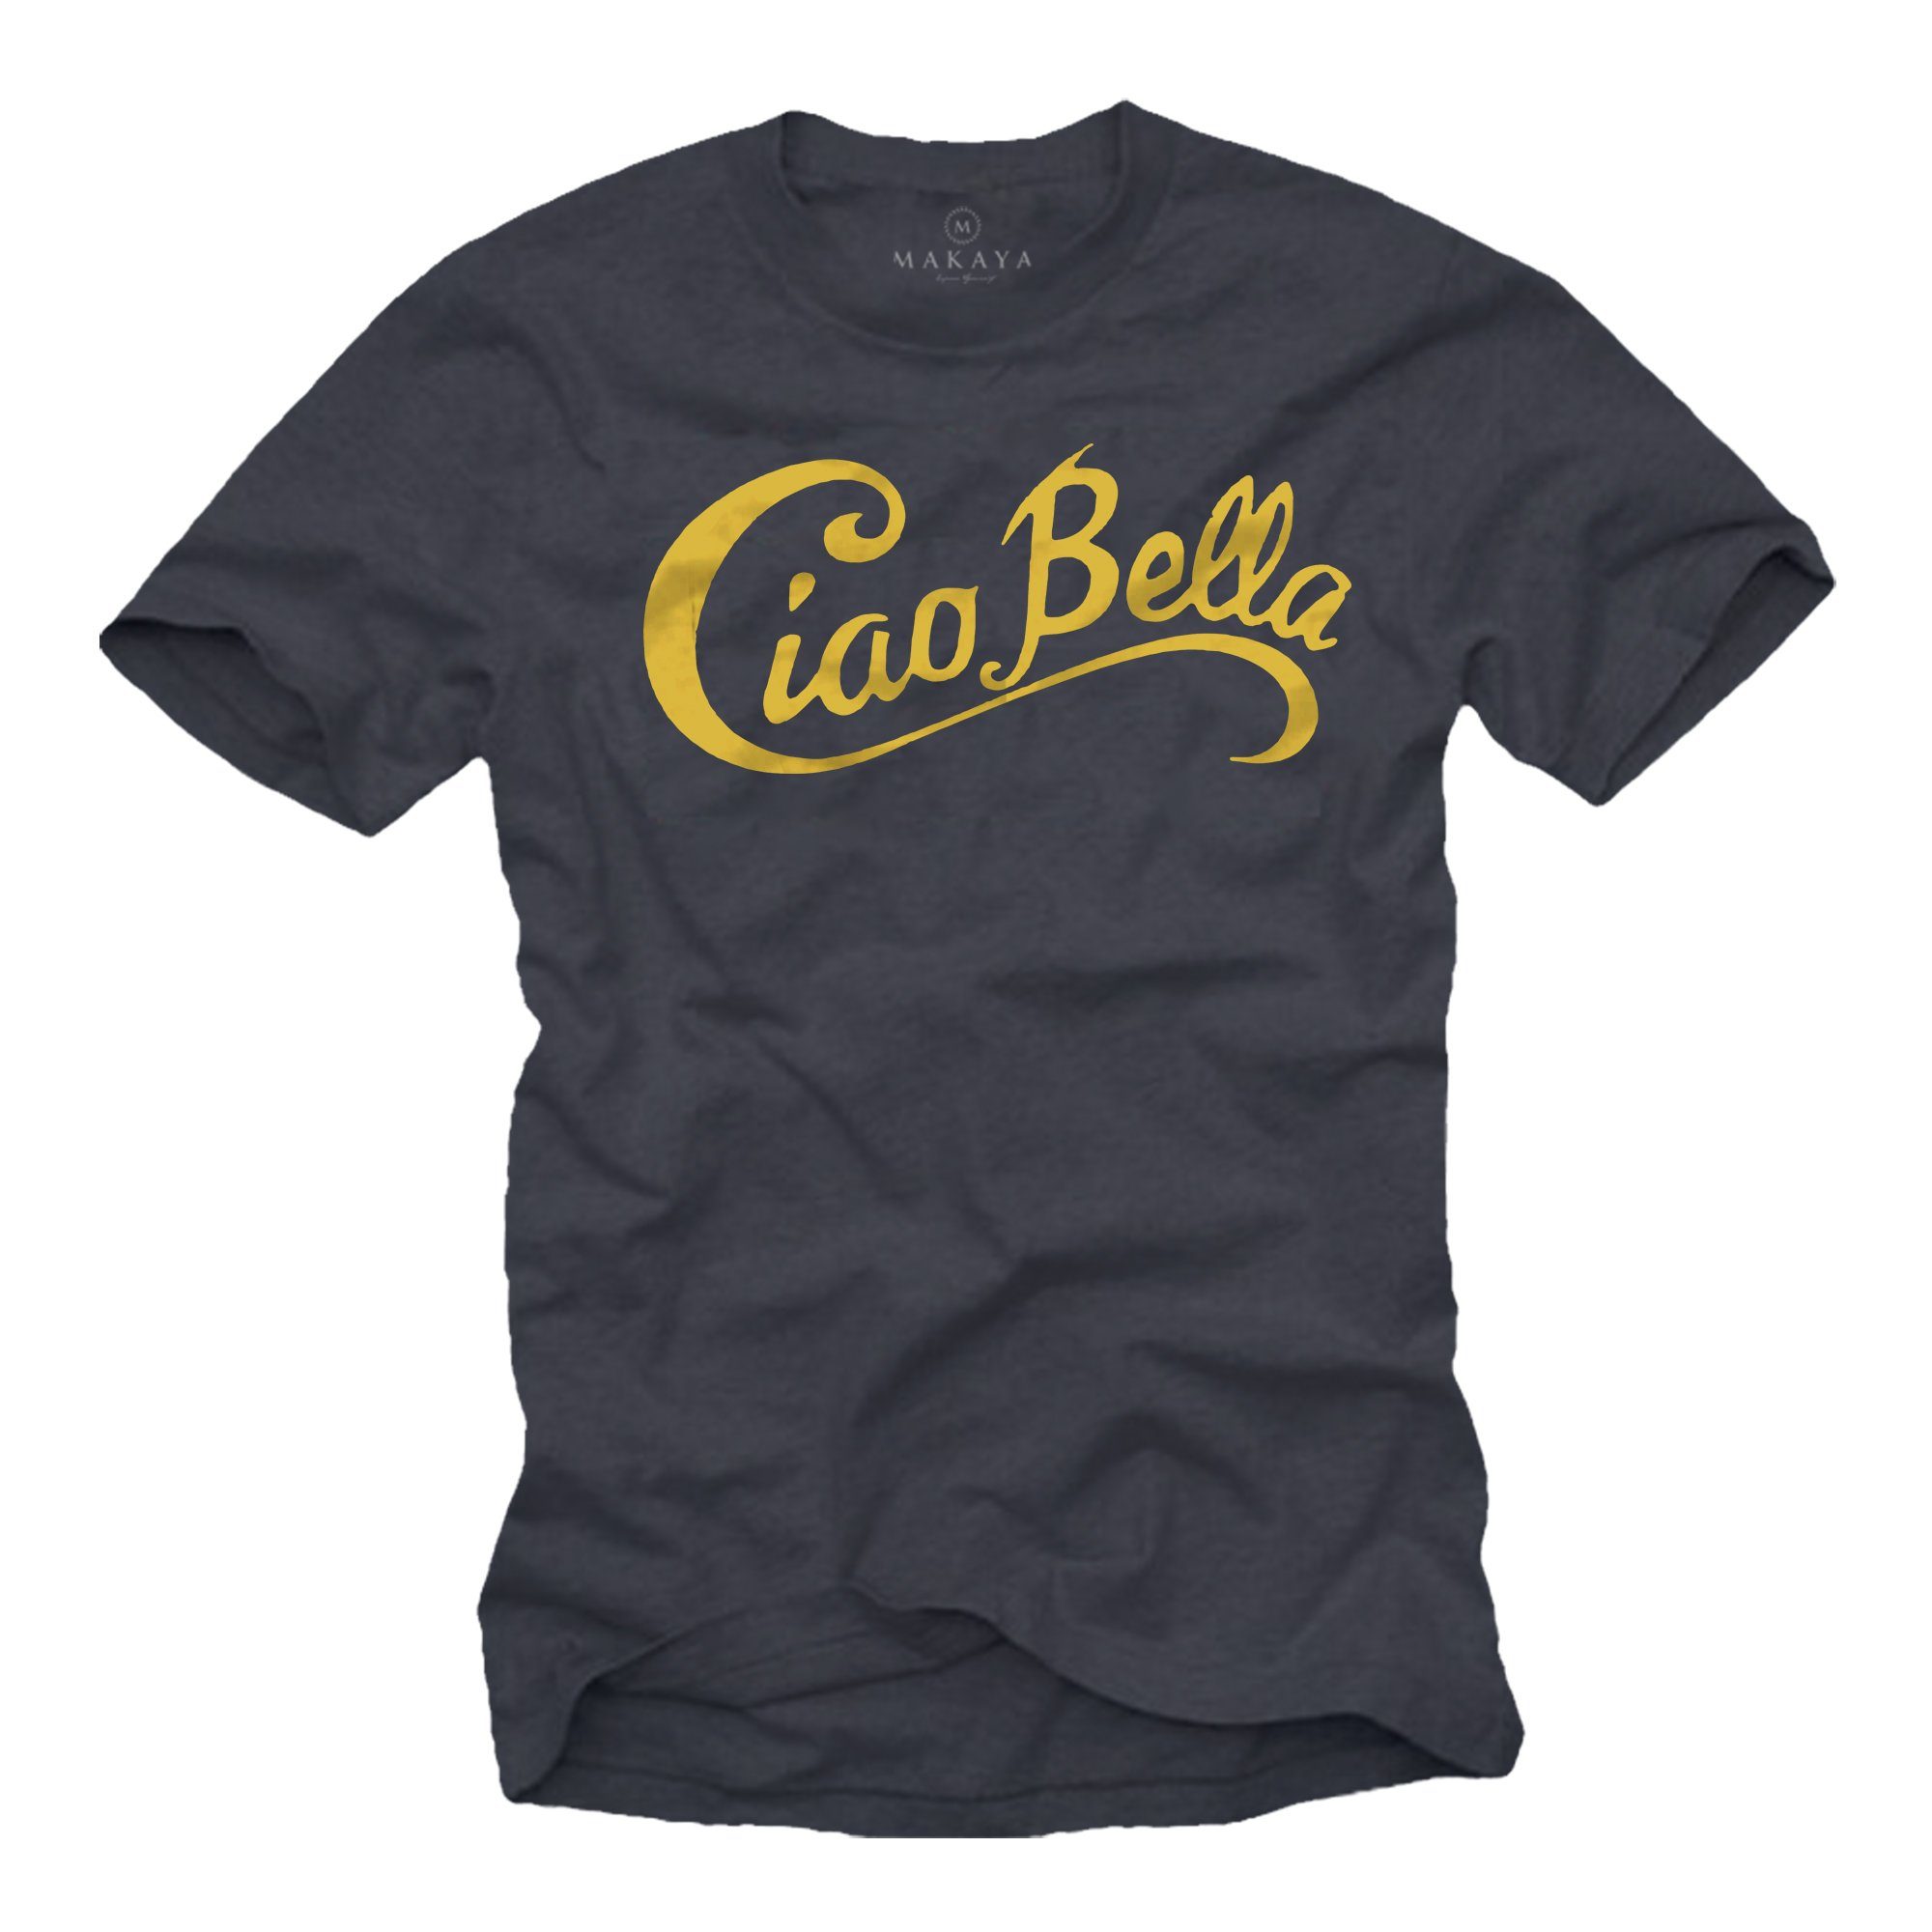 Spruch Italienischer Style Italien Mode Motiv Blaugrau Herren Logo, Print-Shirt Ciao Bella Coole MAKAYA